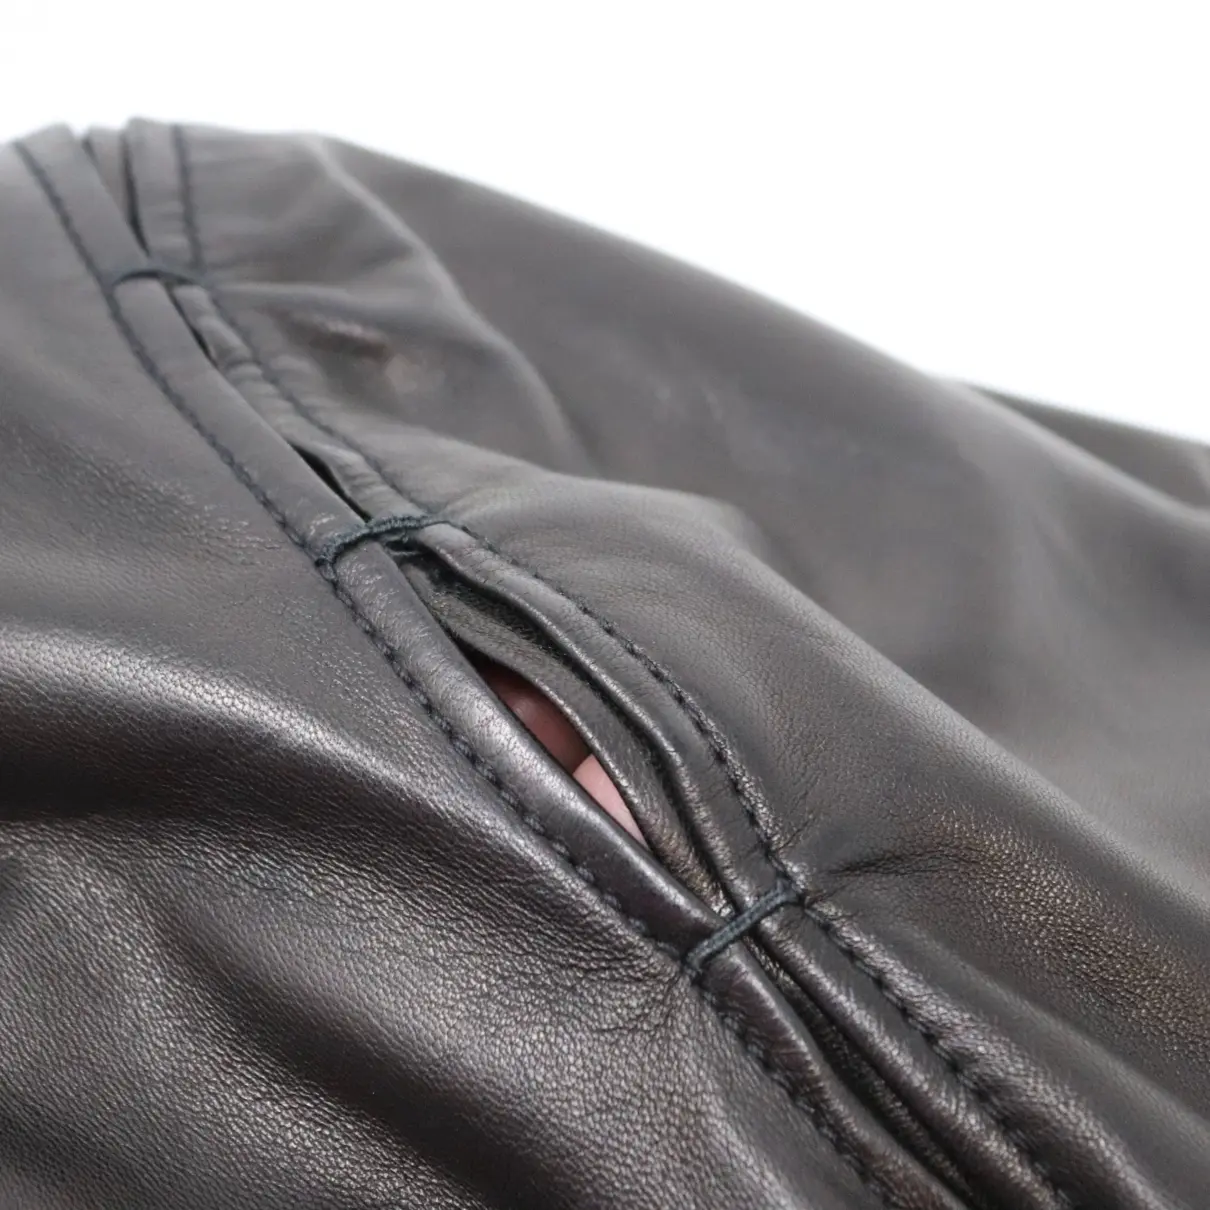 Yves Saint Laurent Leather jacket for sale - Vintage